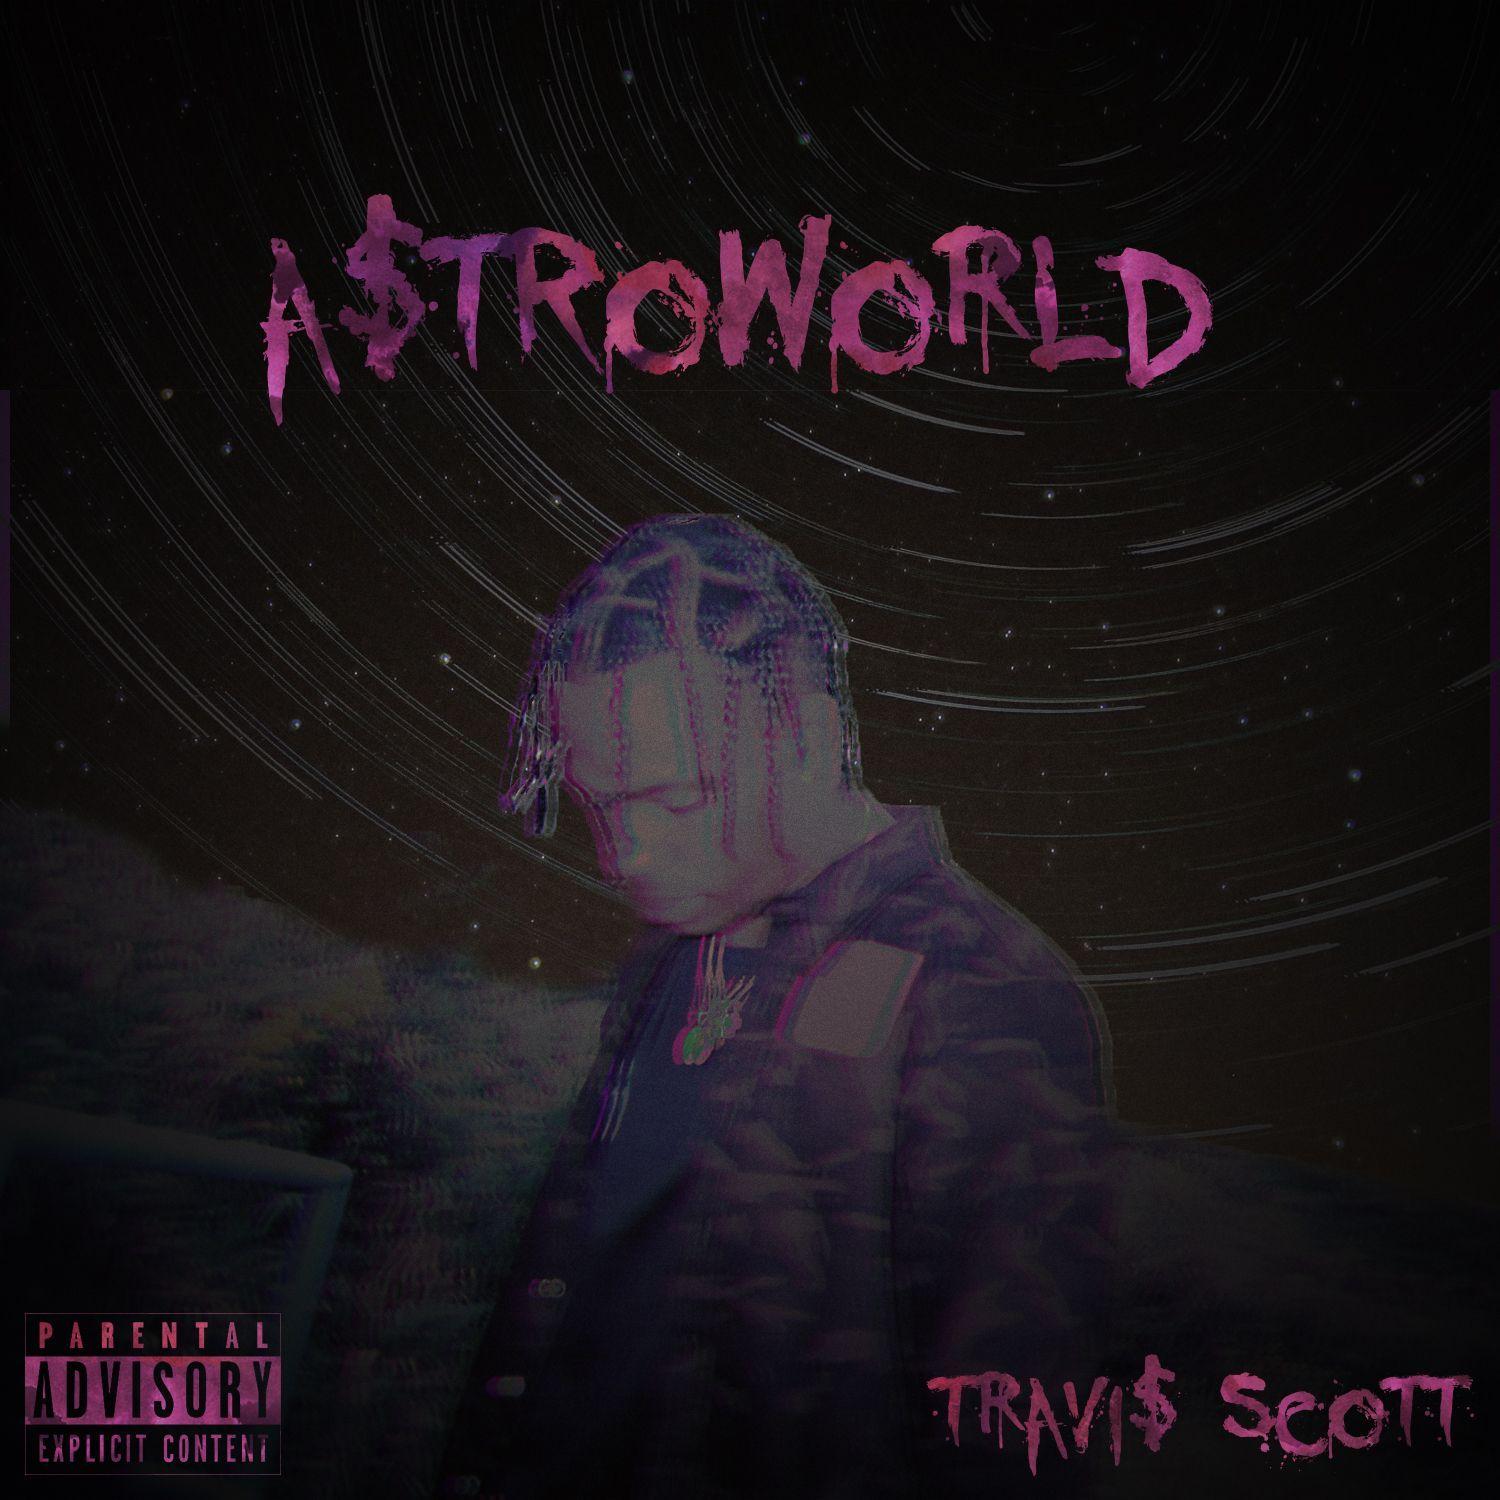 Astroworld Scott (Fan Art Design). Music Artwork